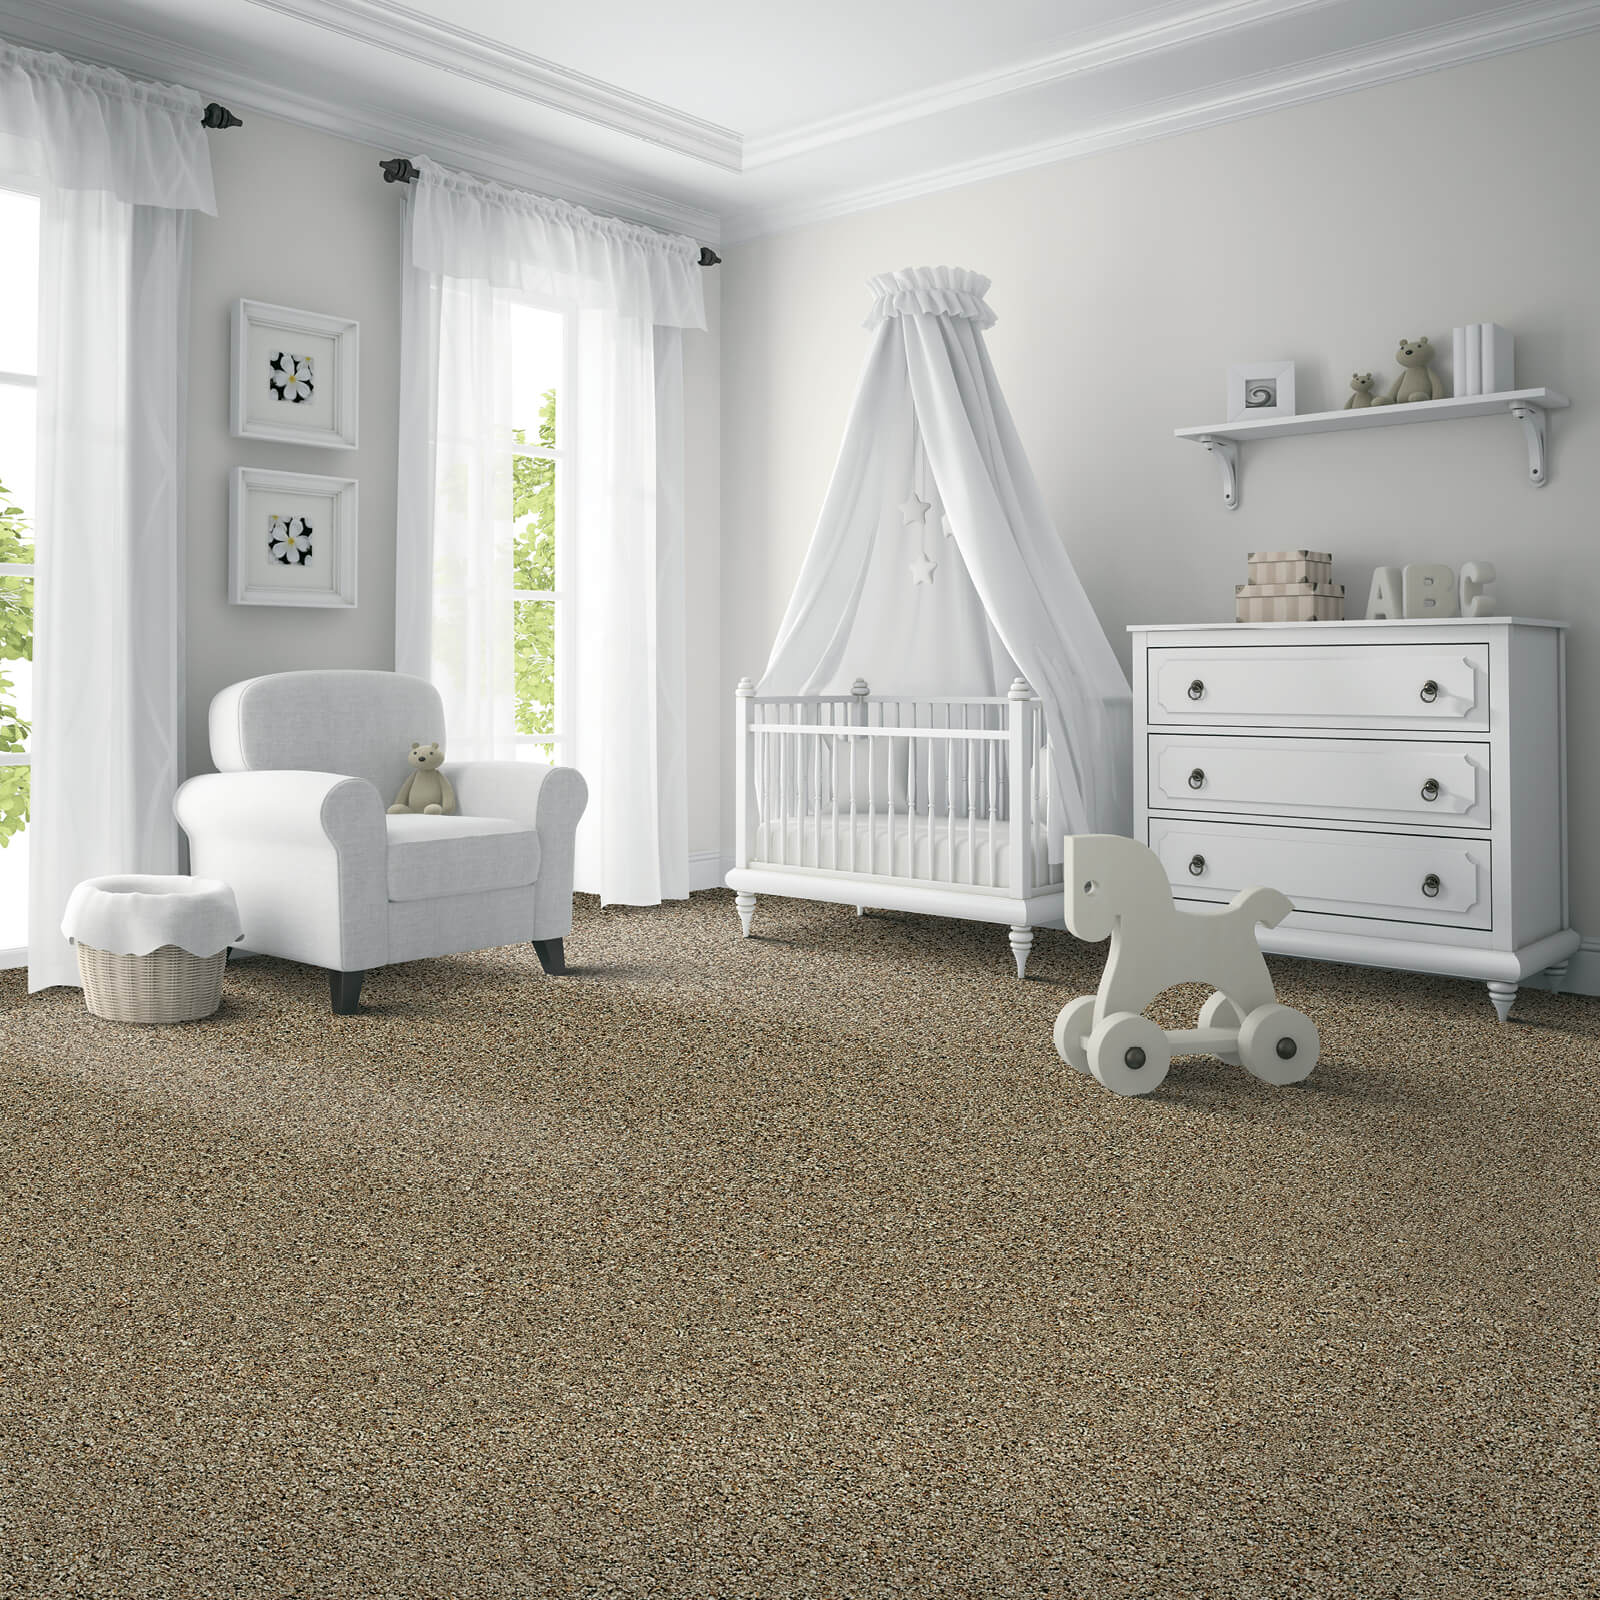 Baby room flooring | AJ Rose Carpets